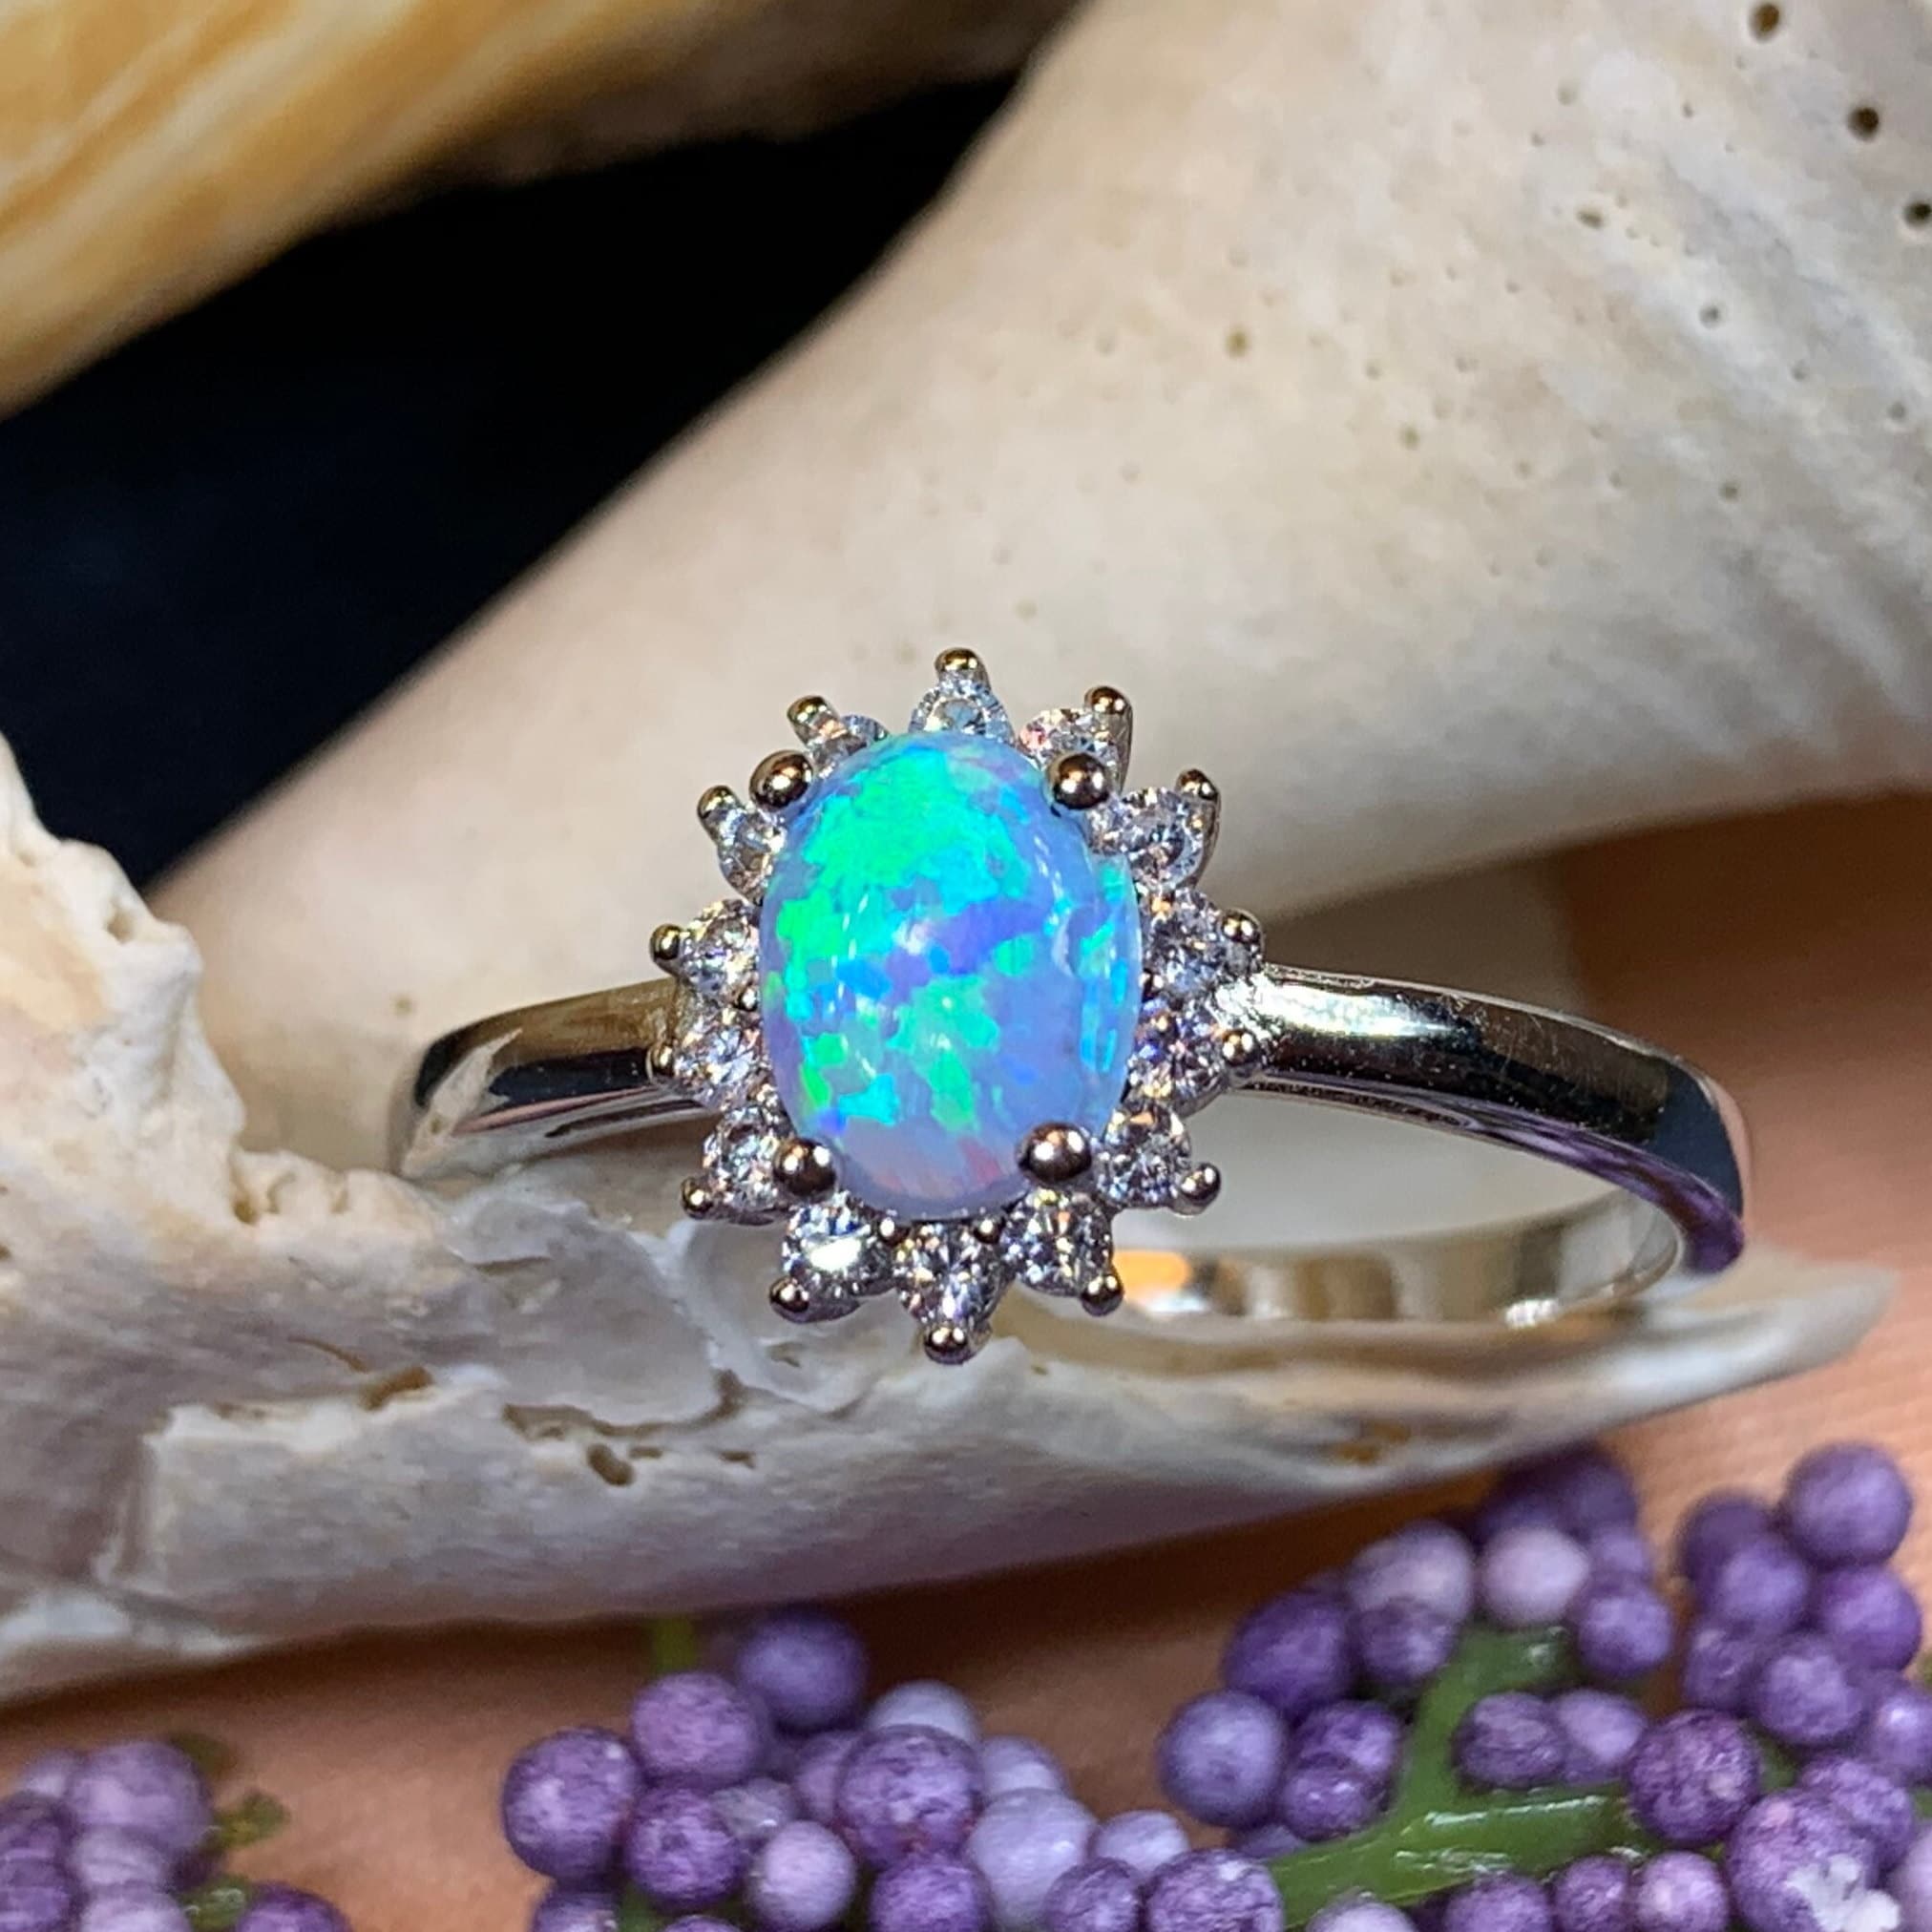 Blue opal ring